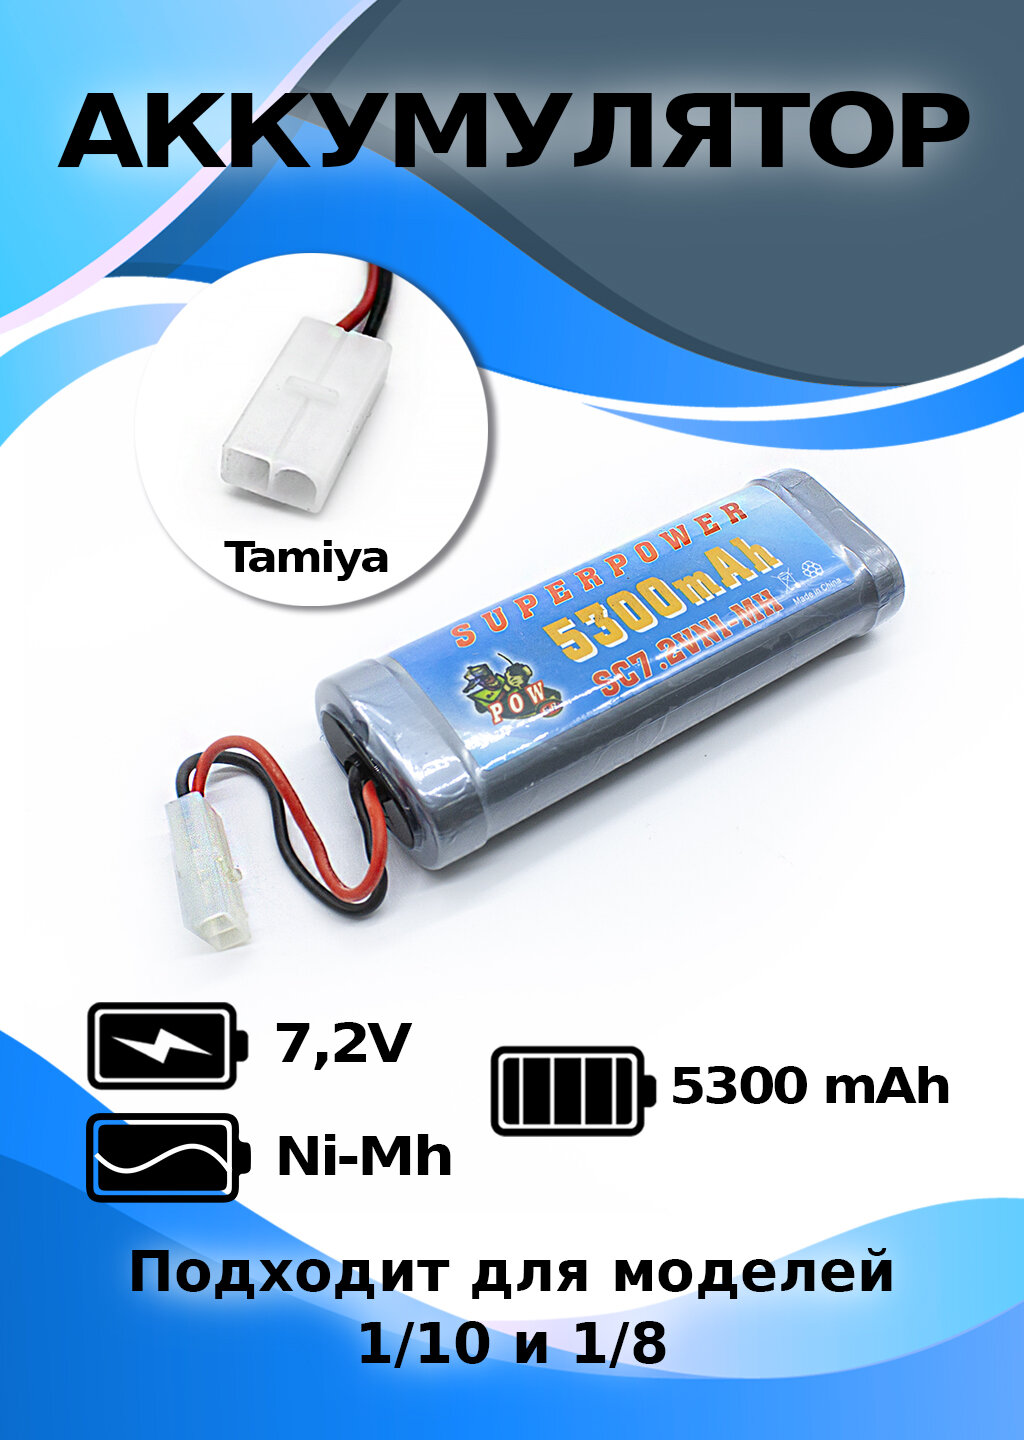 Аккумулятор 7,2 V 5300 mAh NI-MH, разъём TAMIYA